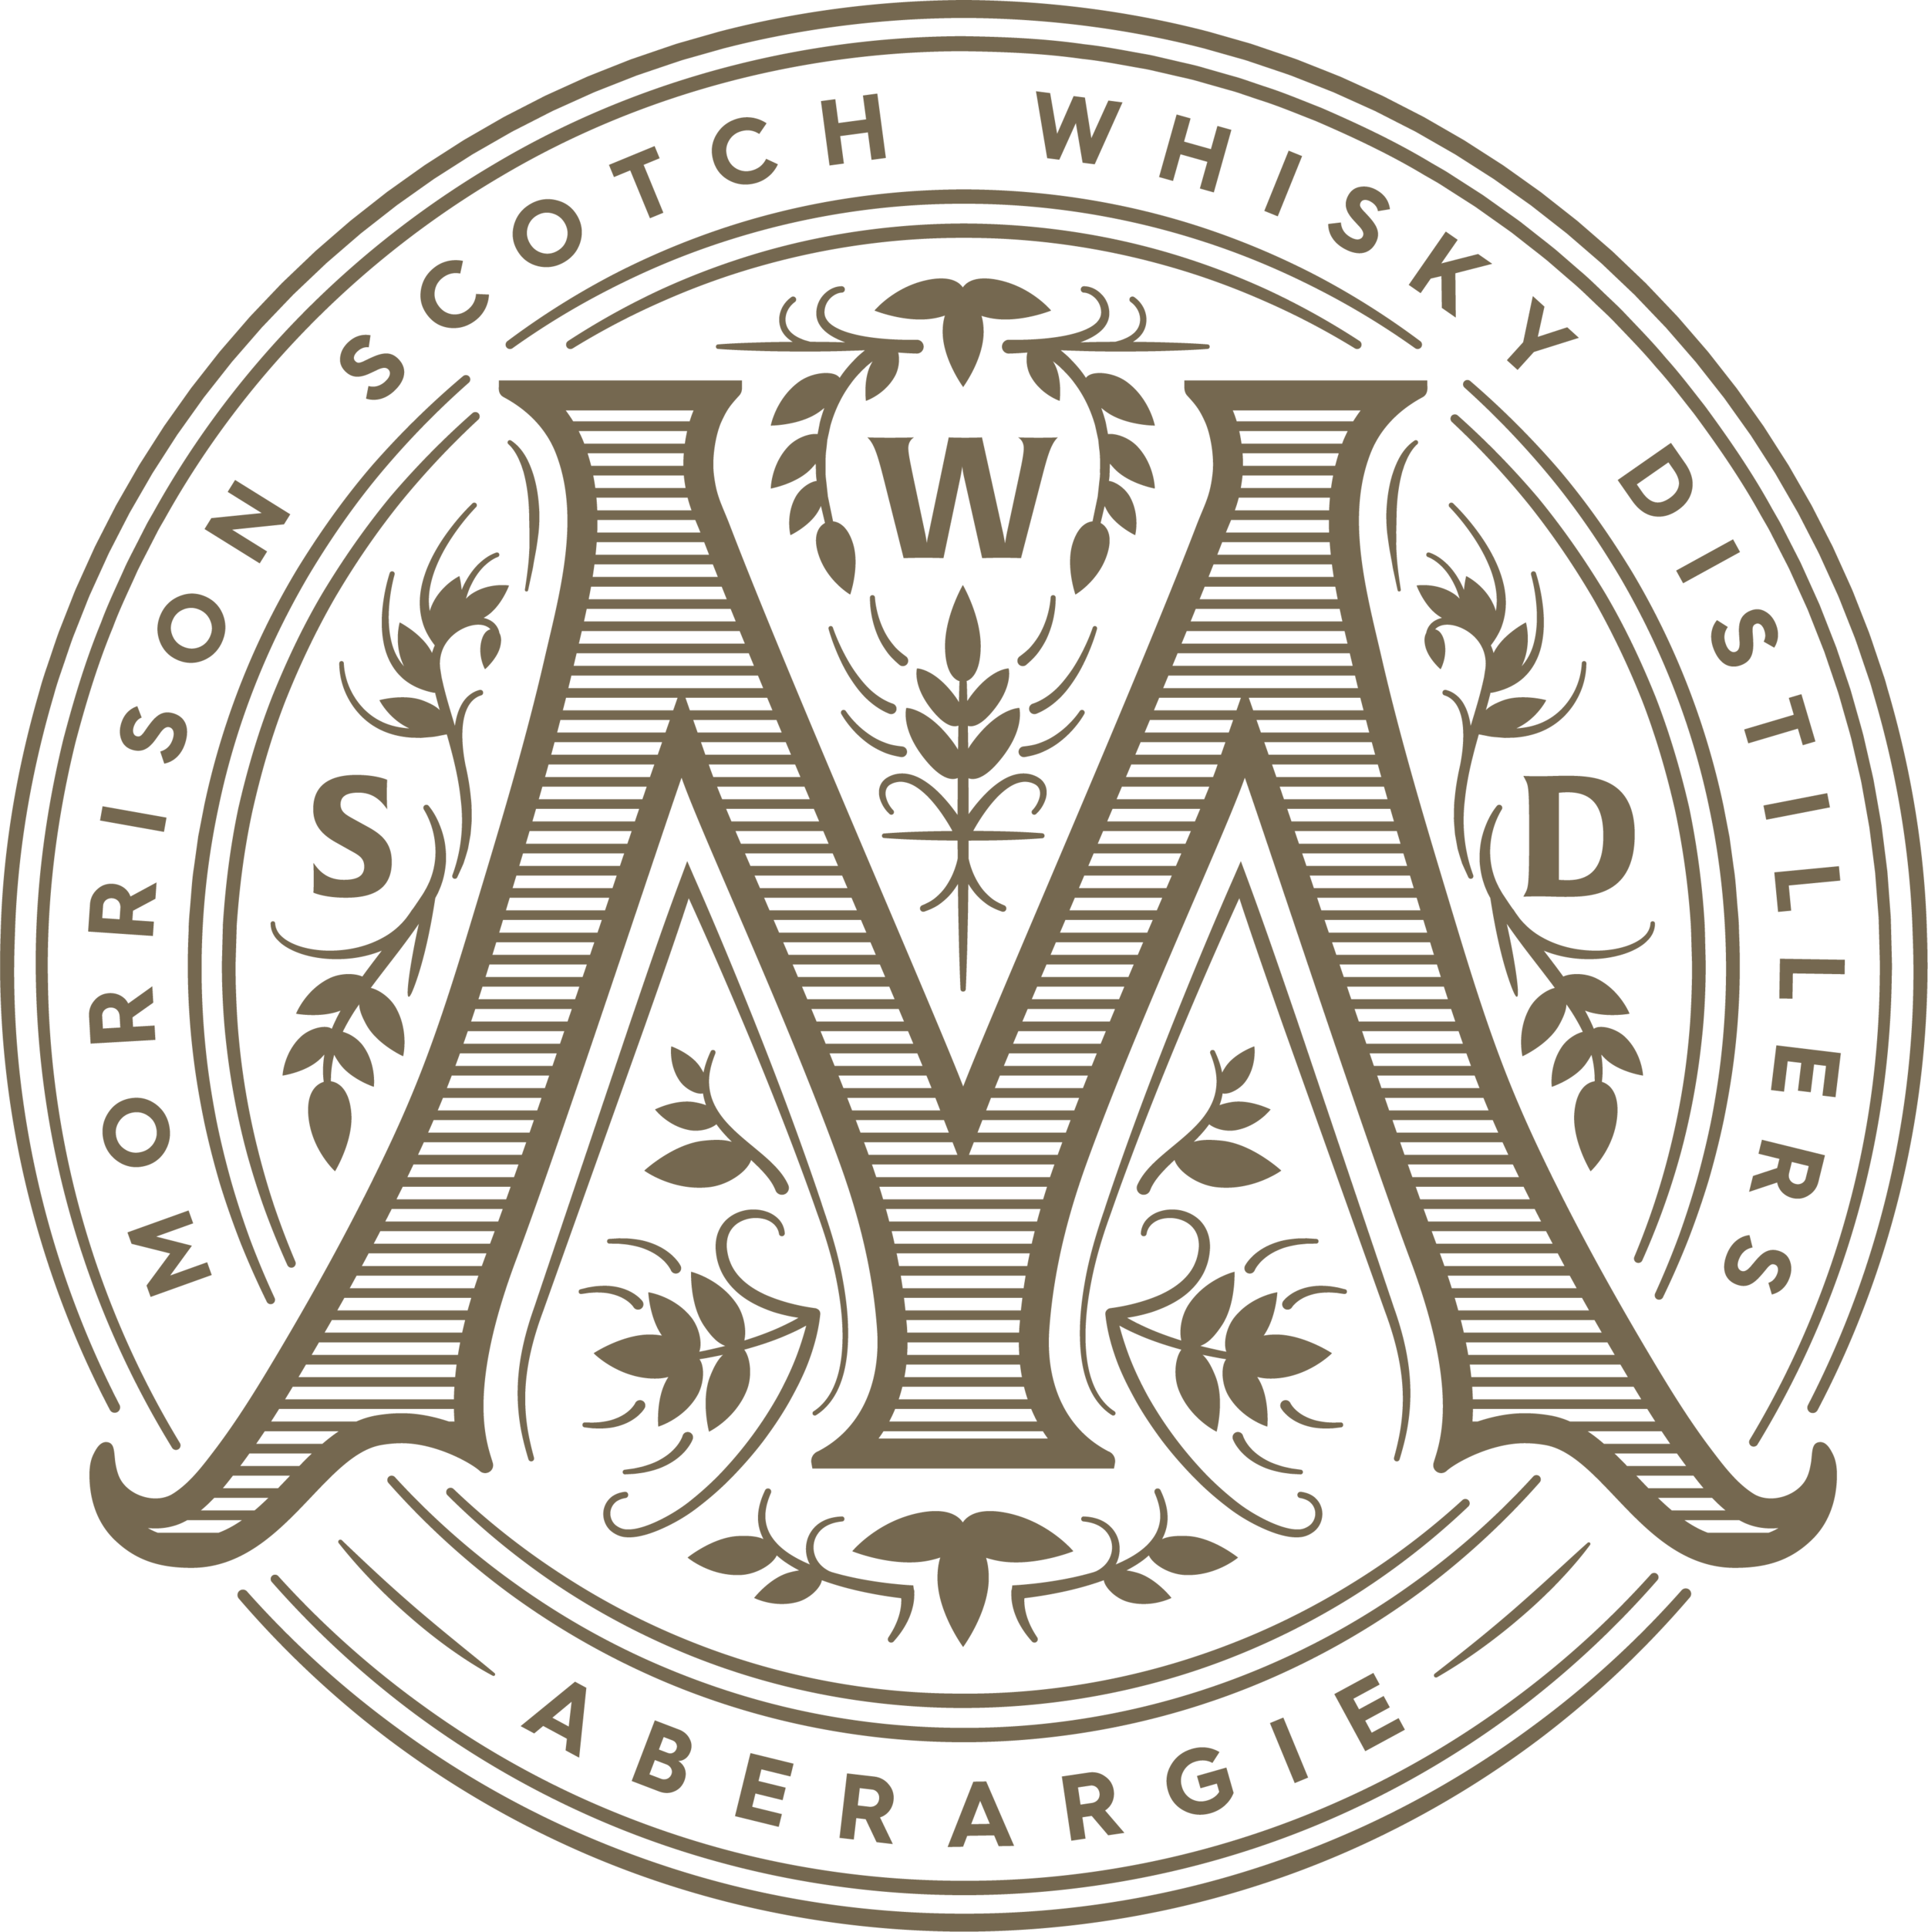 Morrison Scotch Whisky Distillers - Aberargie